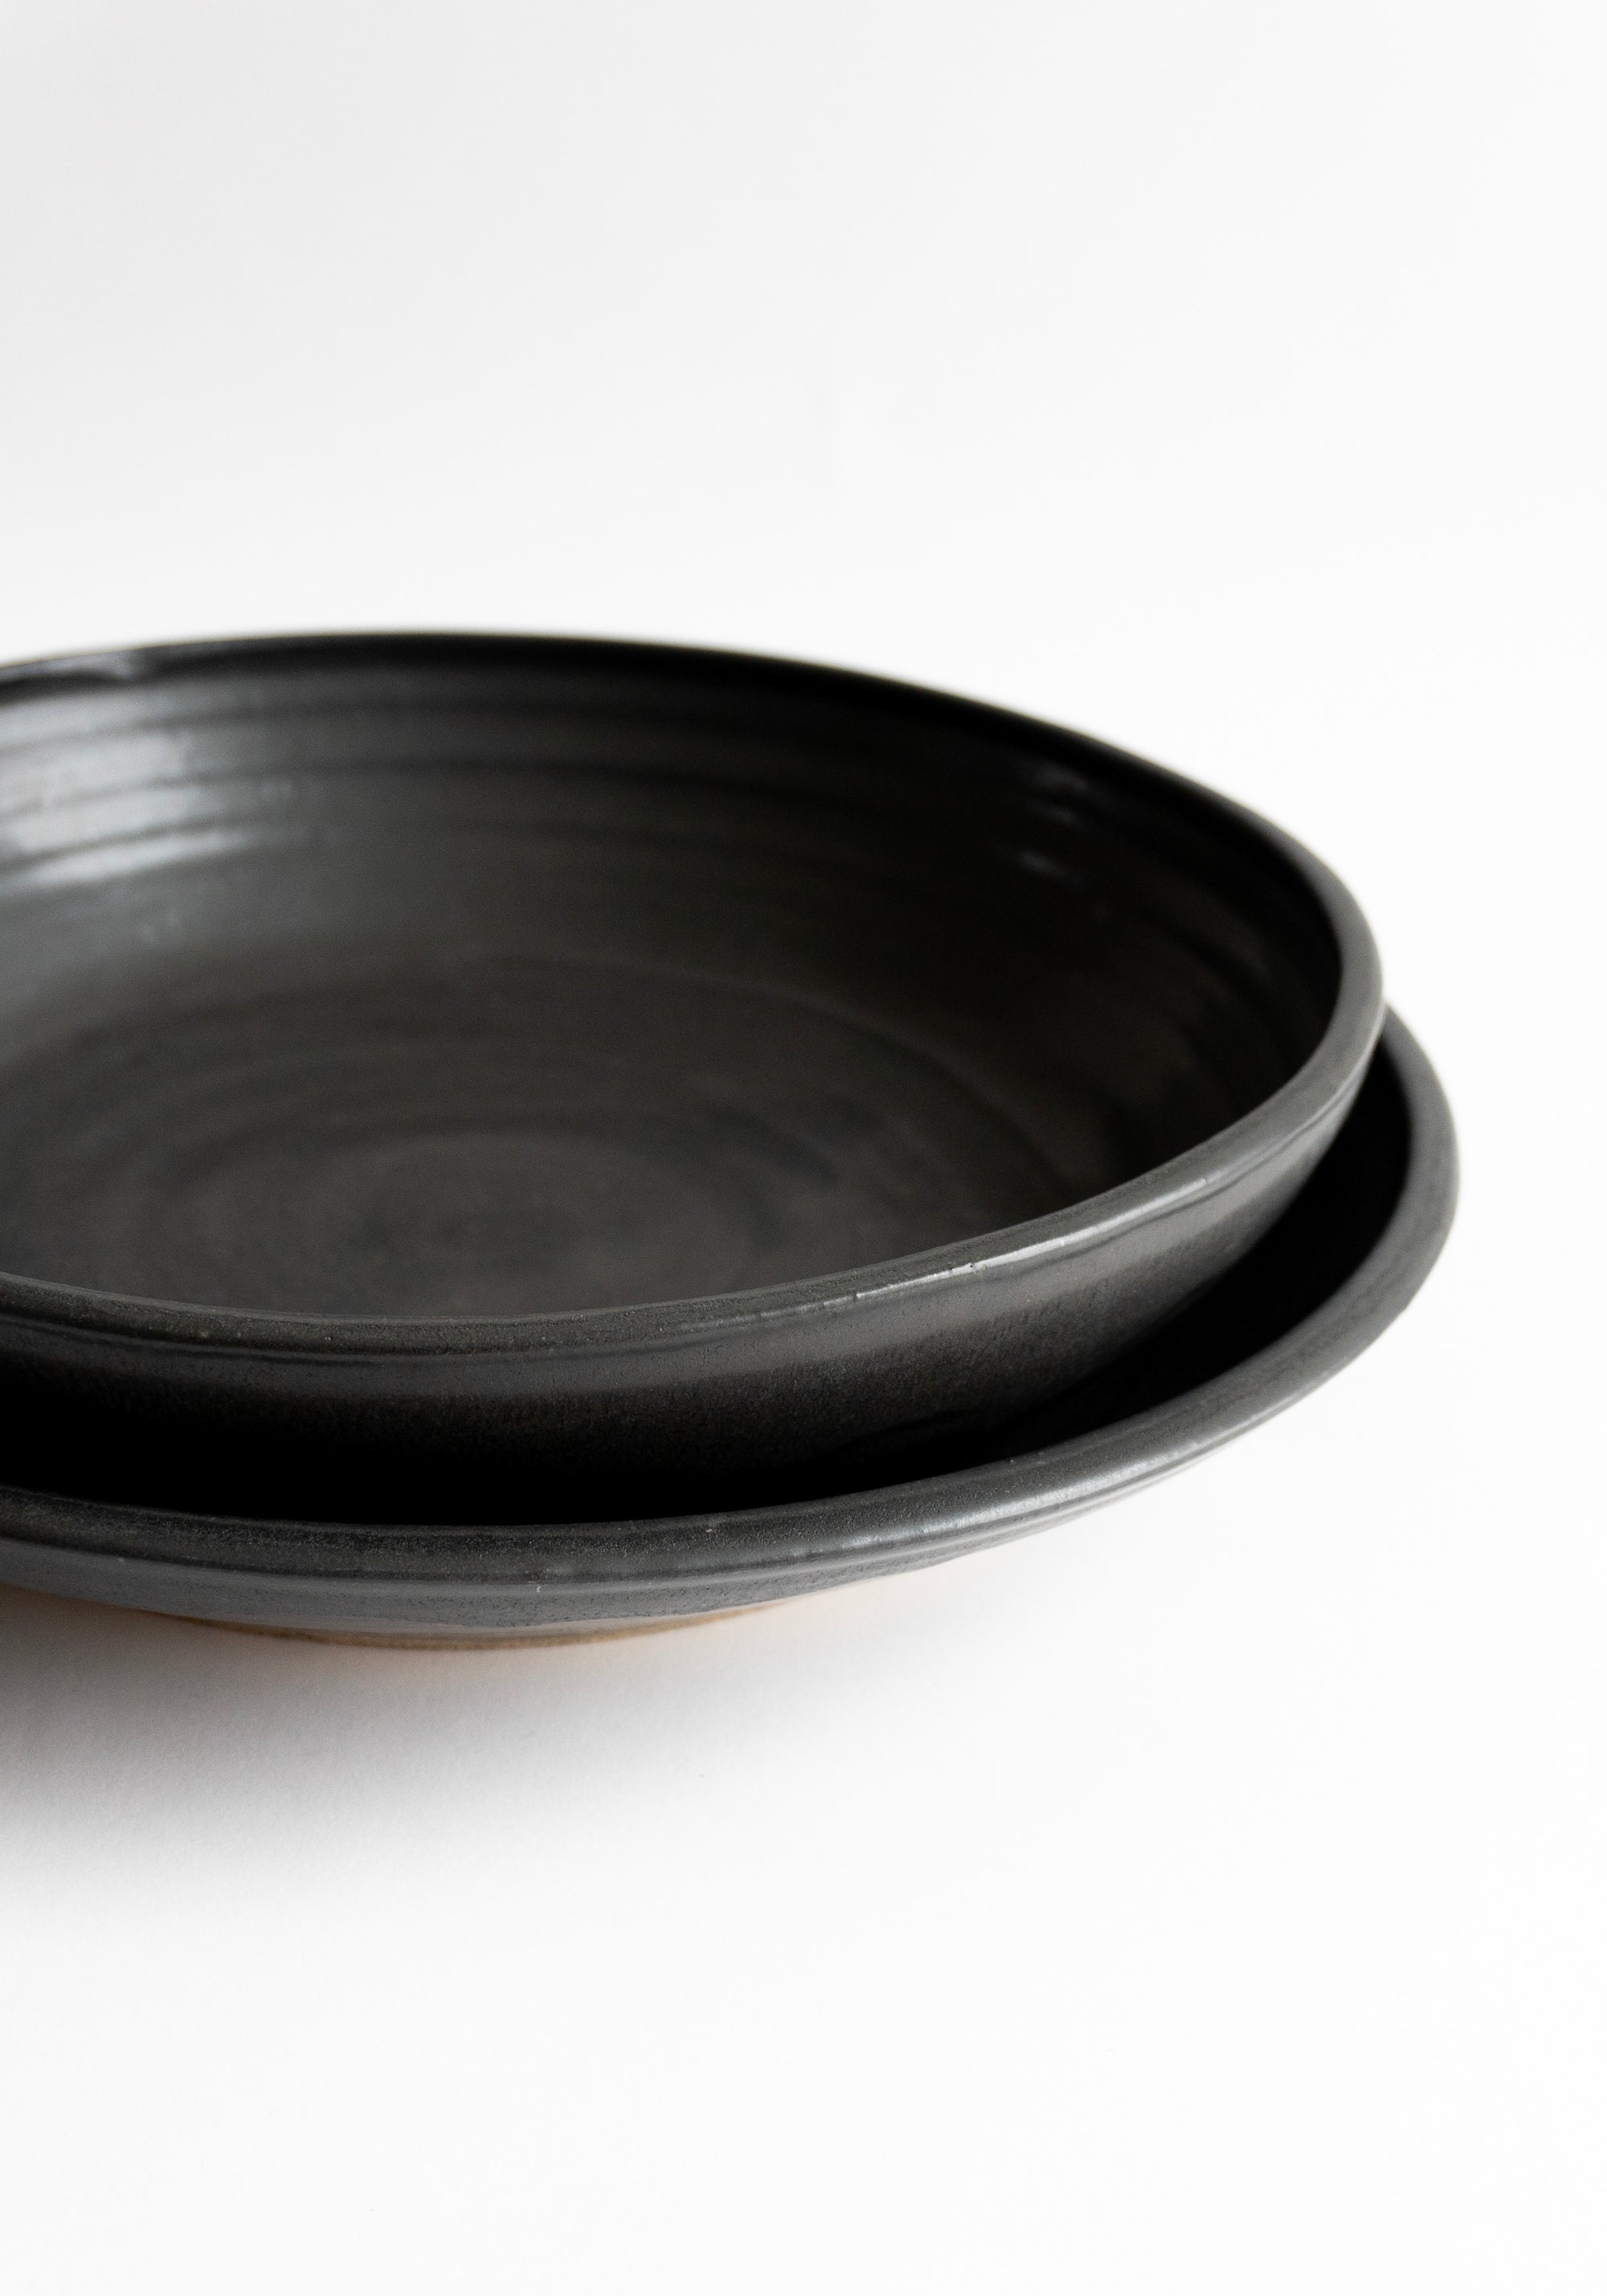 Mitsuko Ceramics Serving Bowl in Coal